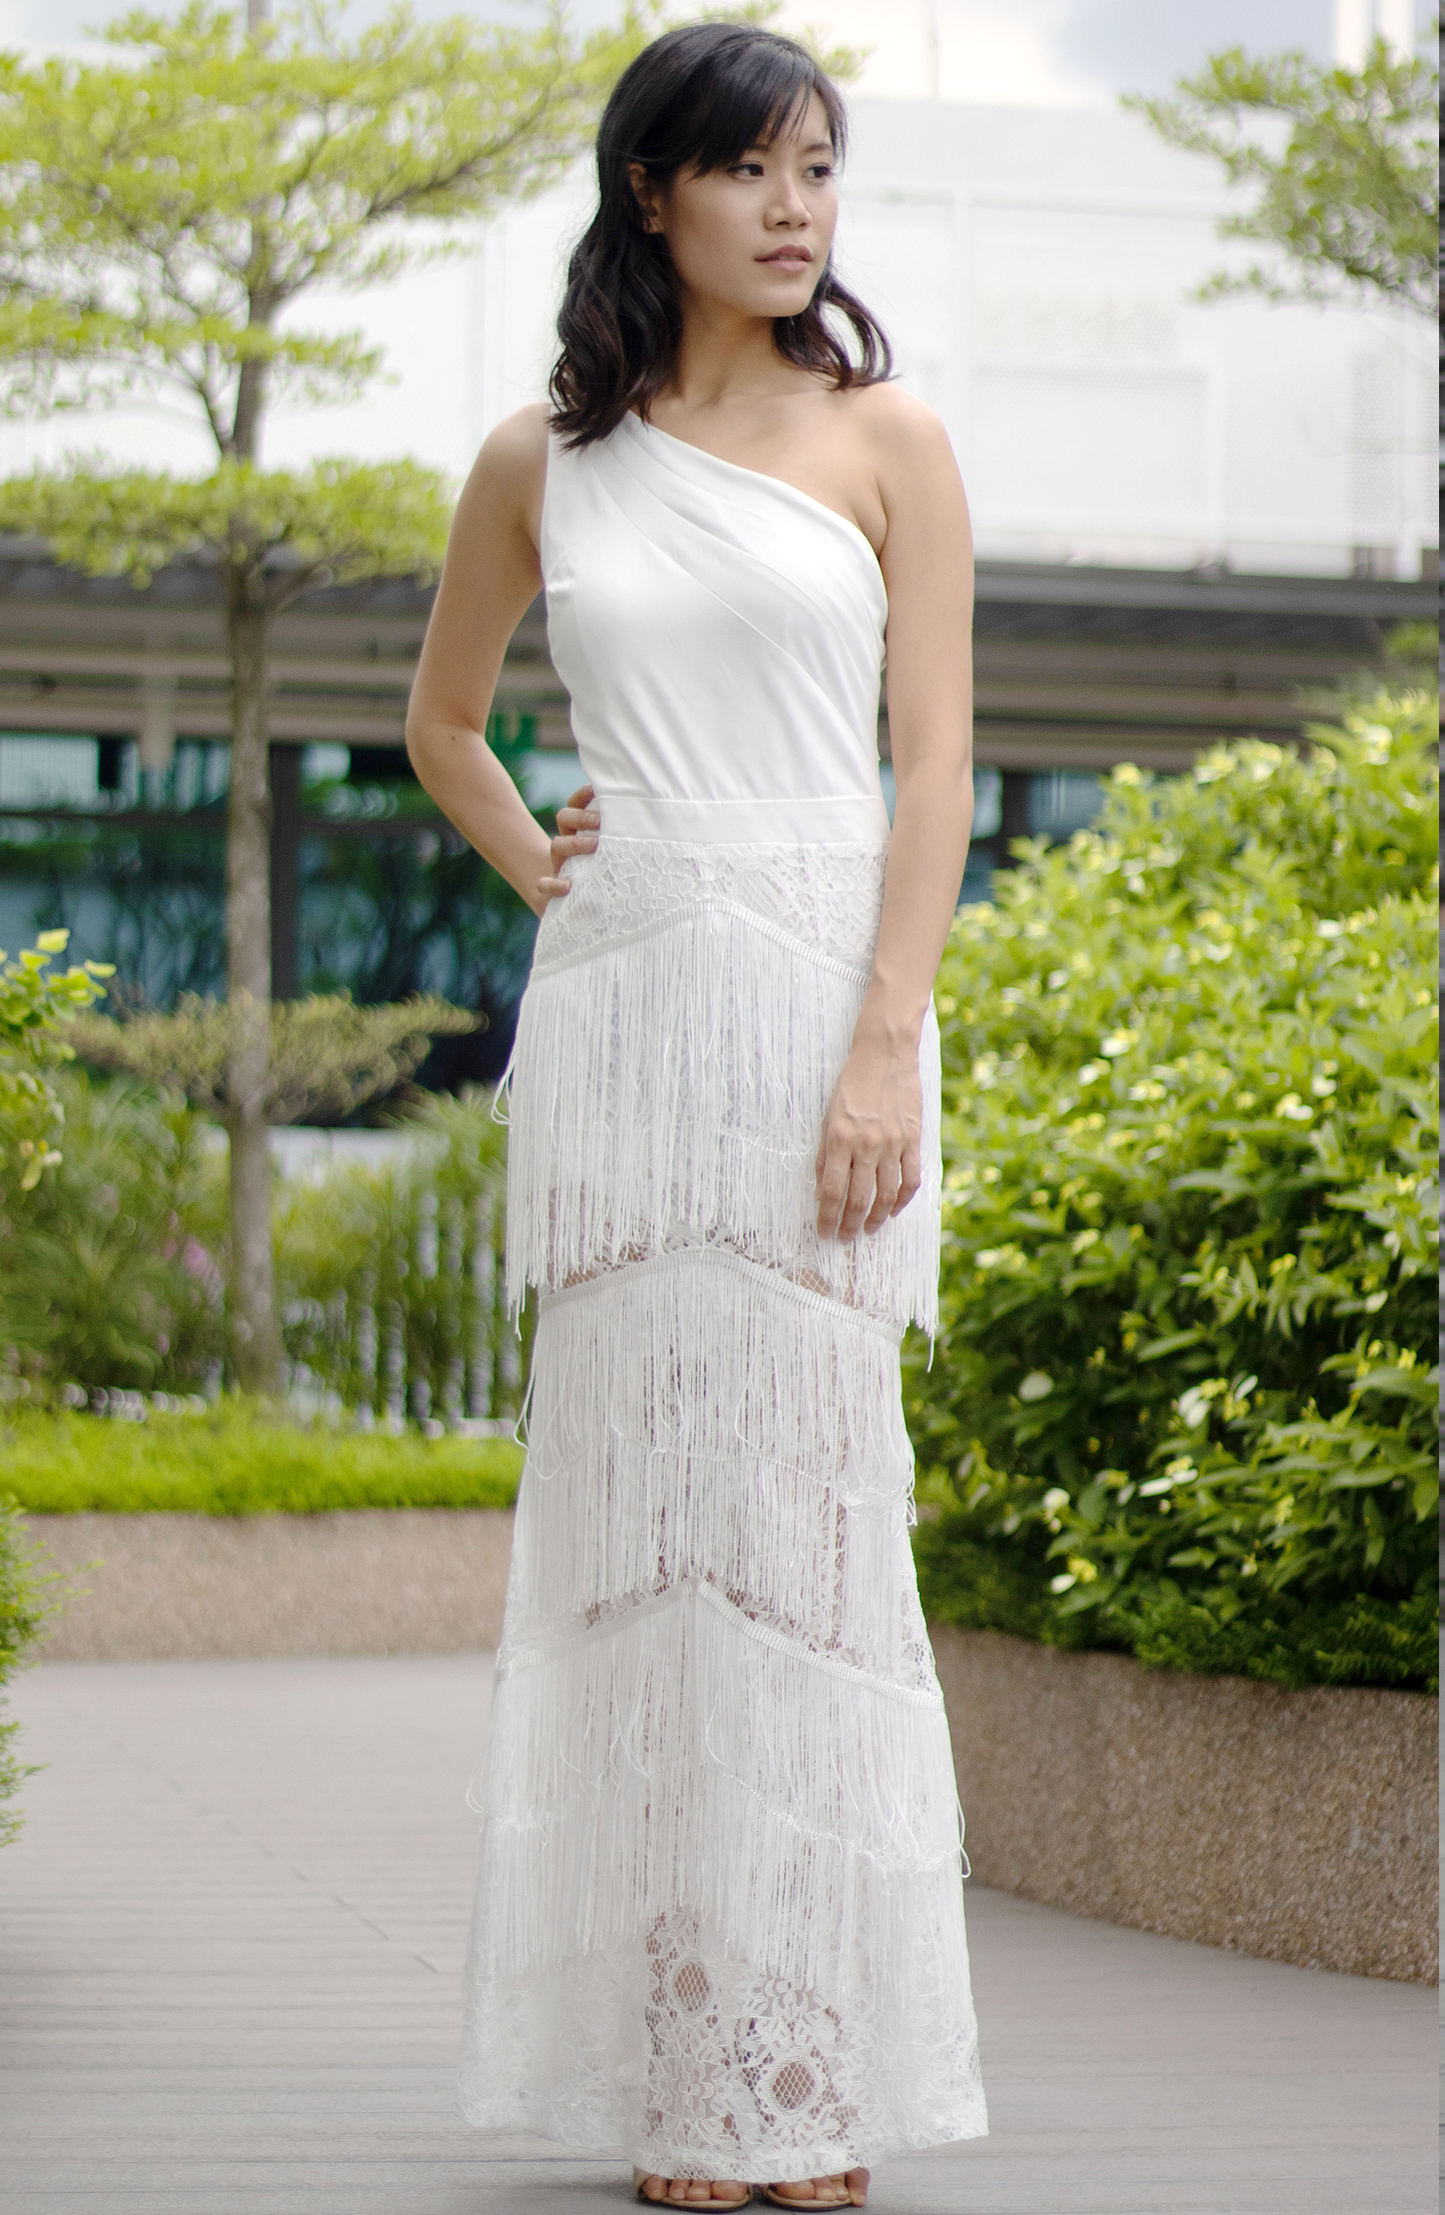 White Elegant One Shoulder Tiered Tassel Playsuit Satin-like Dress Gown